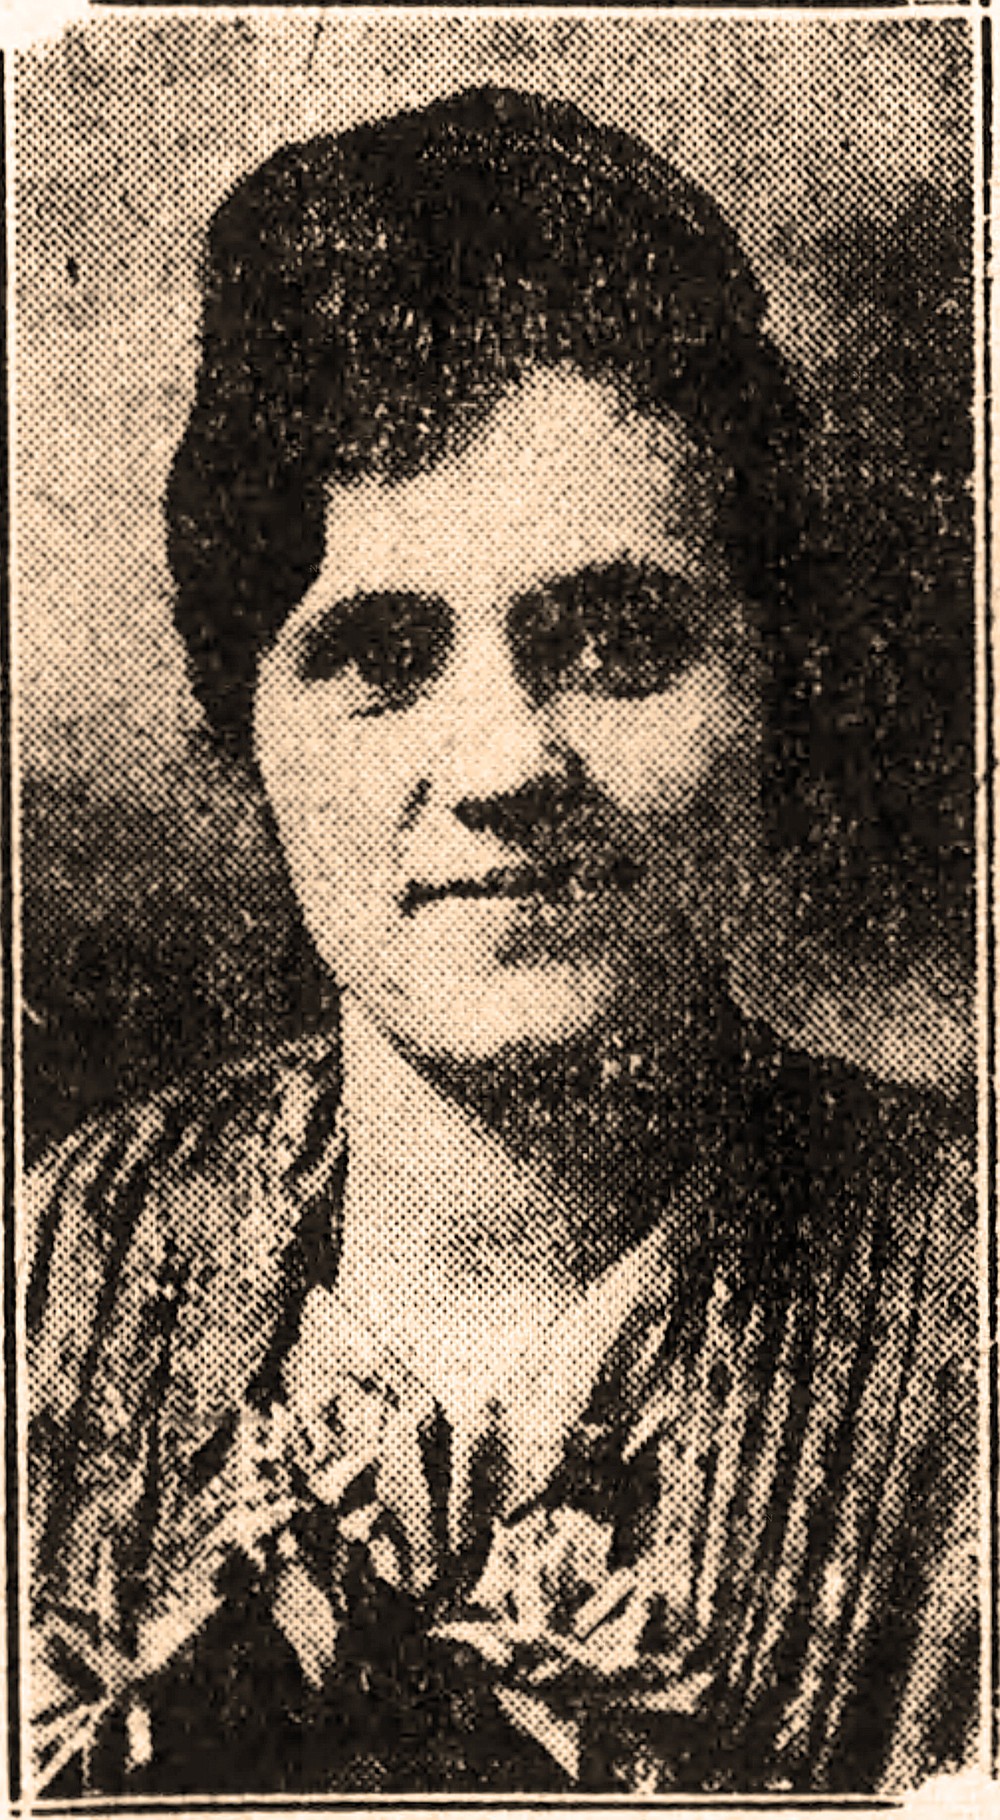 Stenographer Miss Mattie Poole recorded Jimmy Delk's sermons at Little Rock in January 1921. (Arkansas Democrat-Gazette)